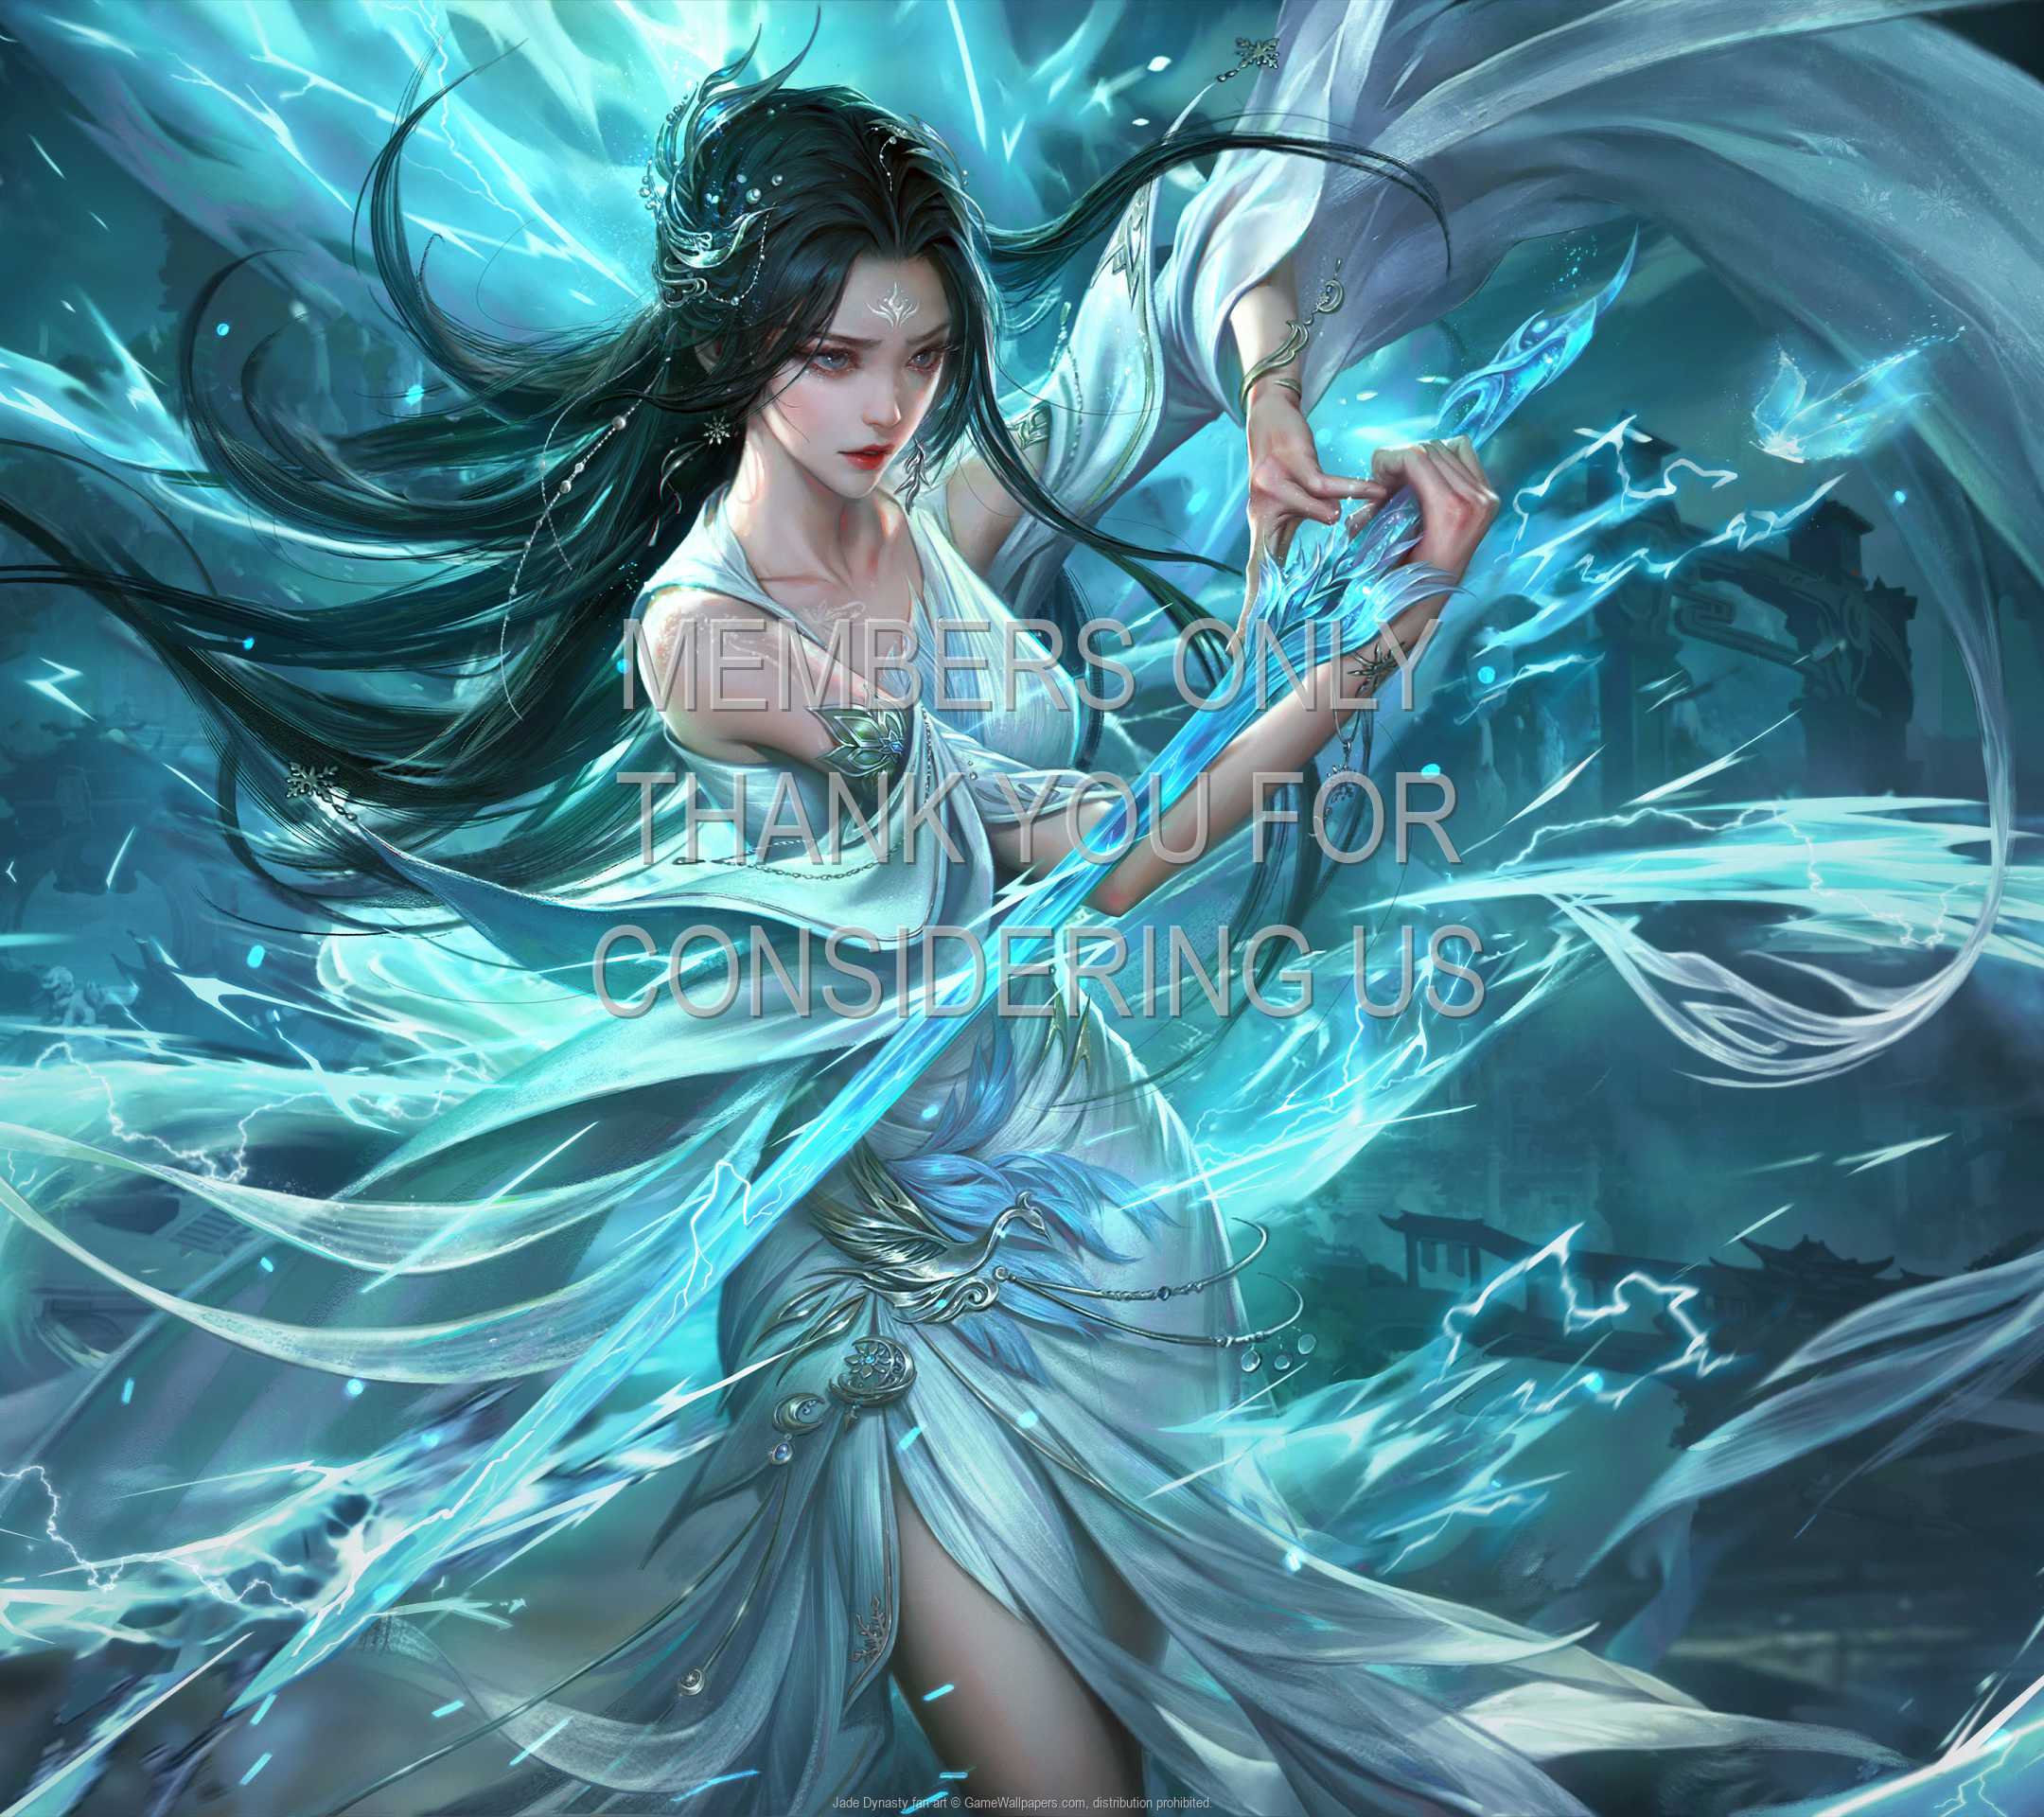 Jade Dynasty fan art 1080p Horizontal Mobile wallpaper or background 01